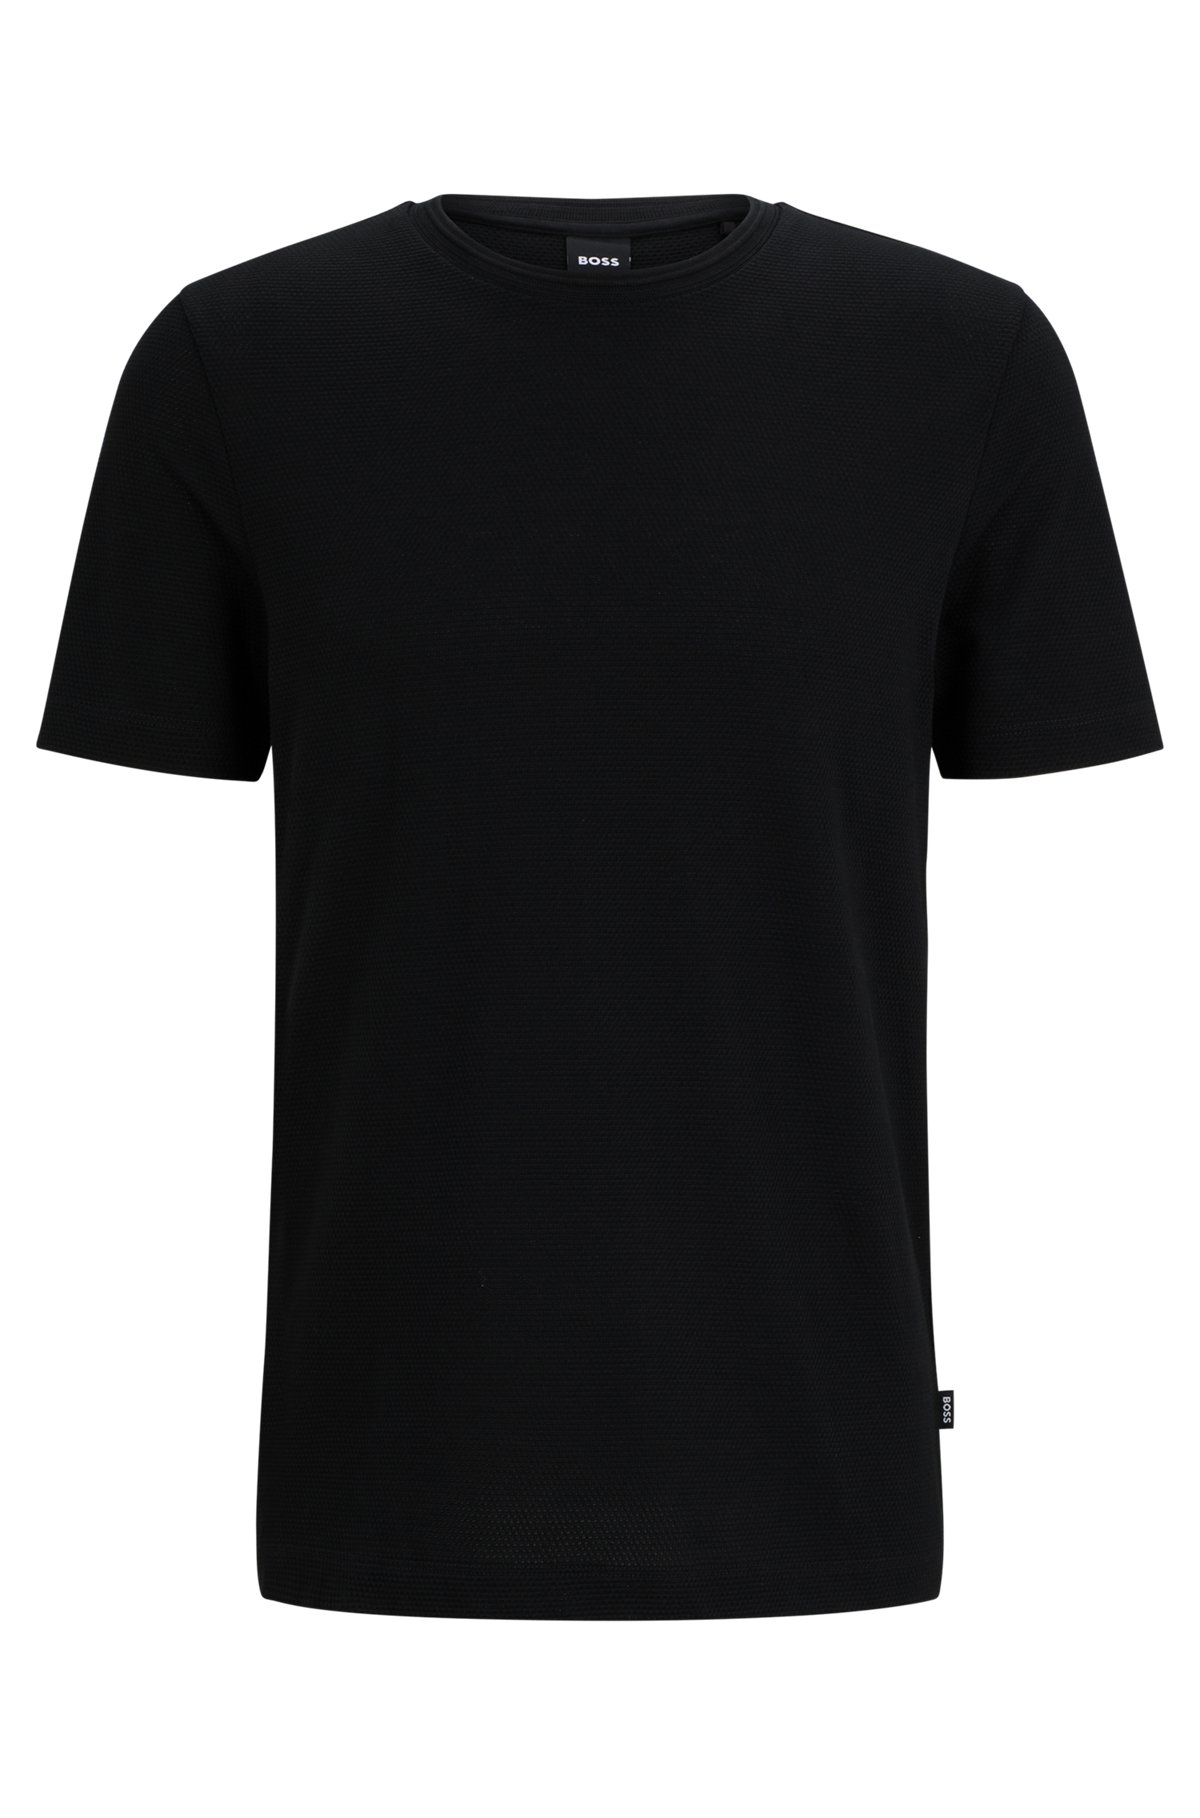 T-shirt with bubble-jacquard structure, Black